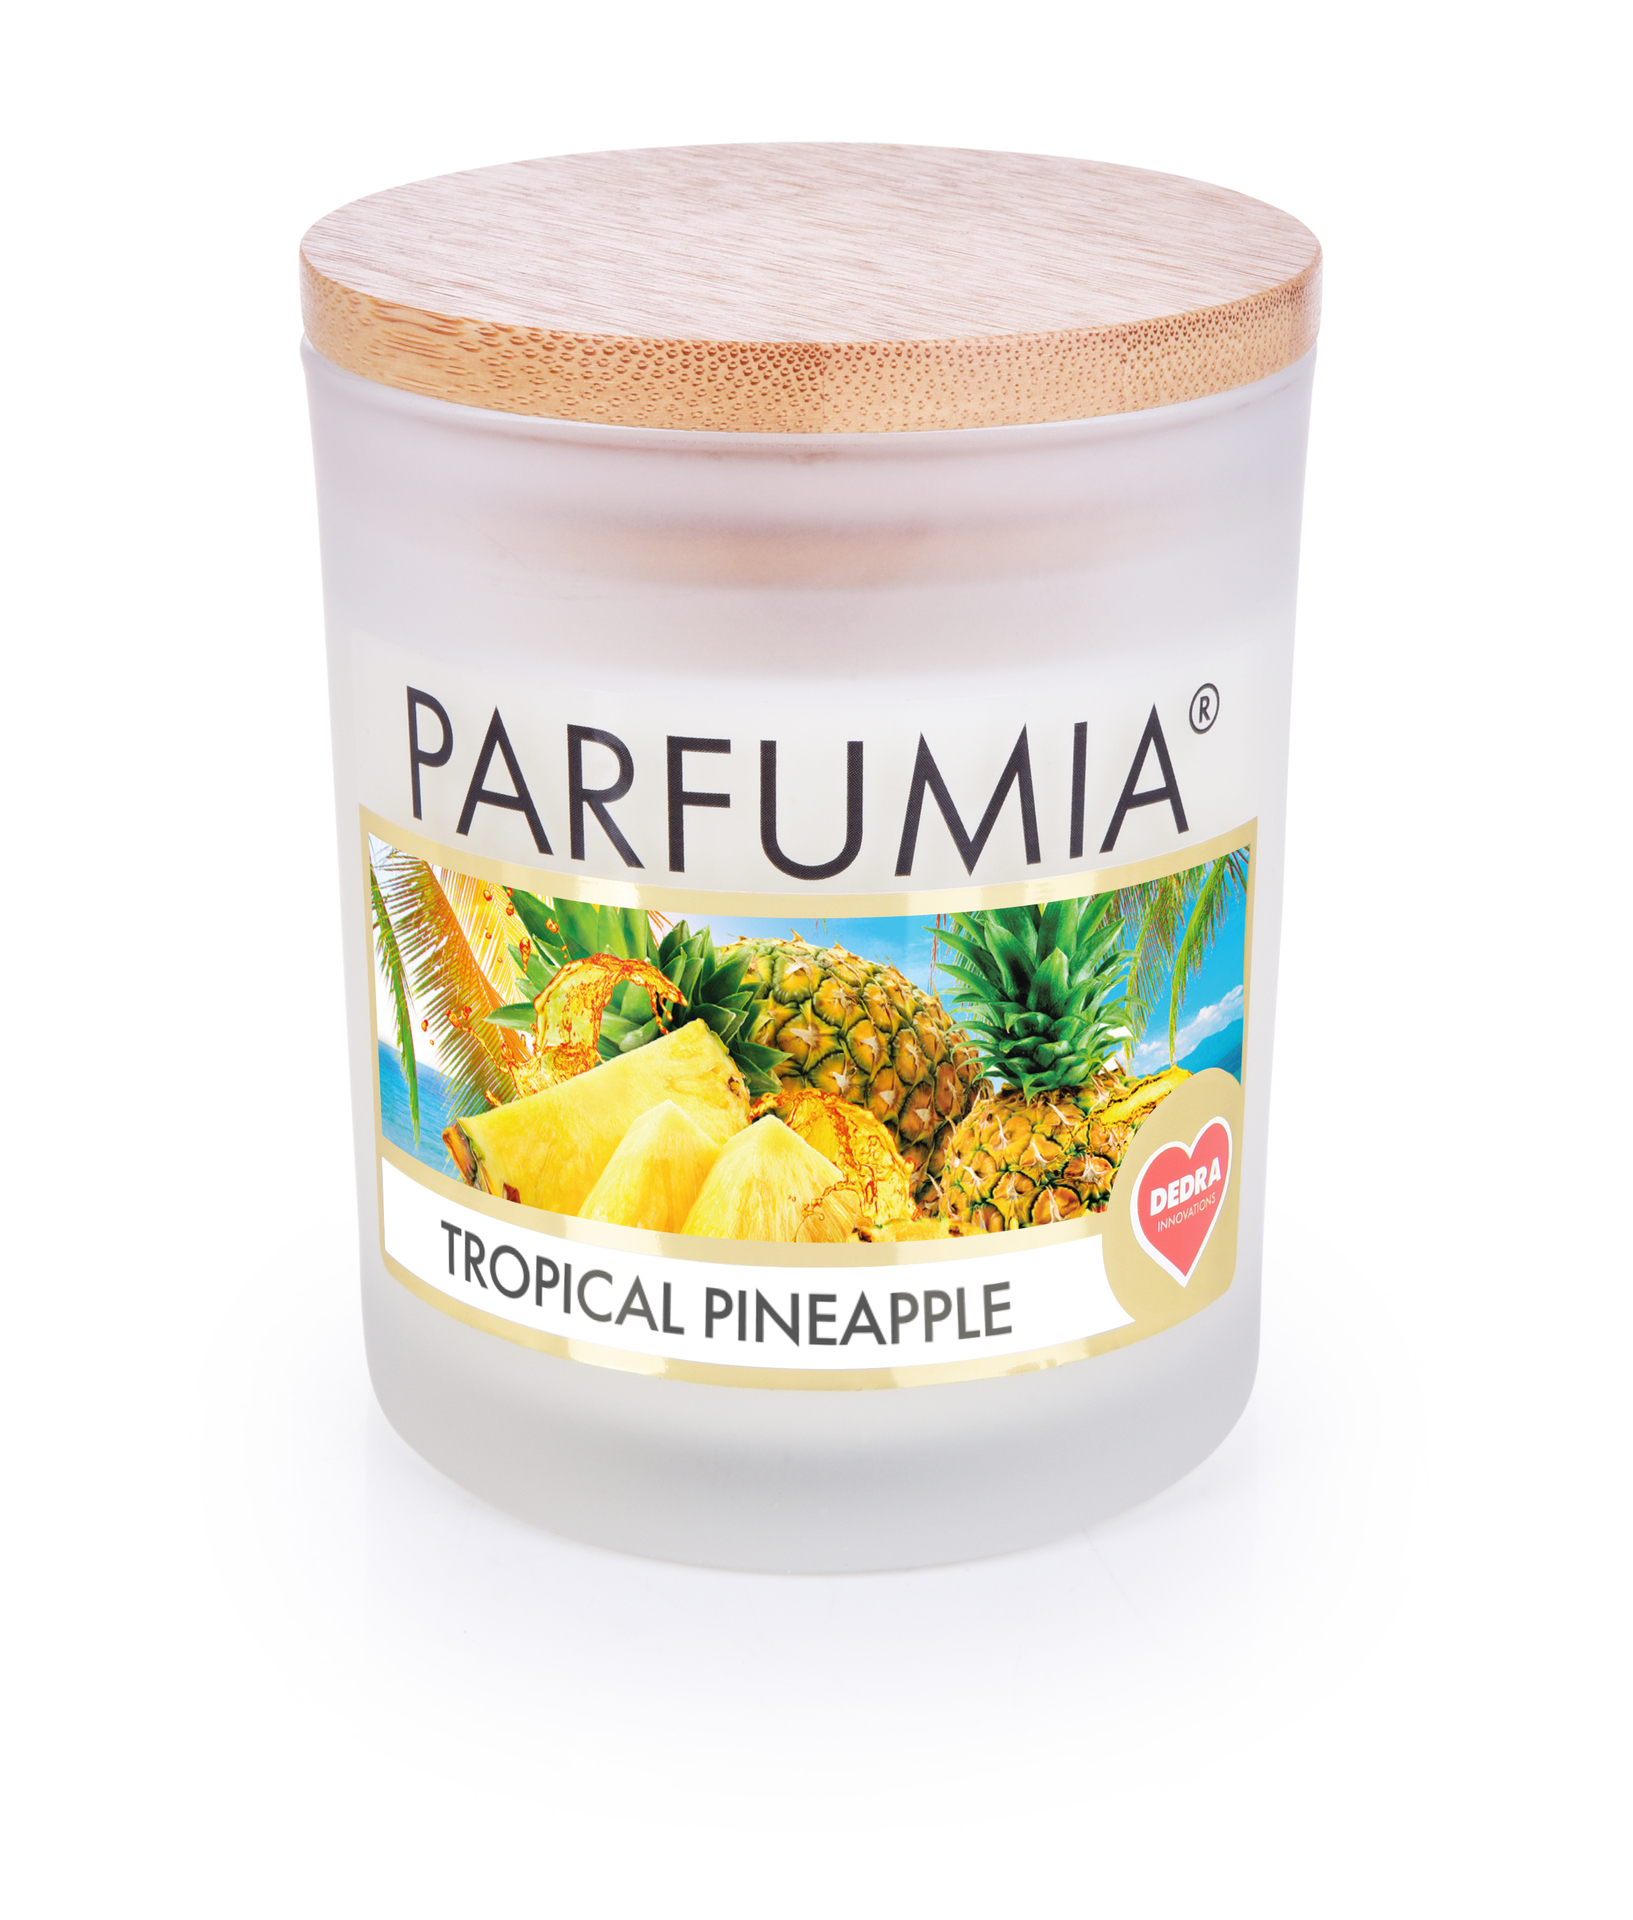 Sójová vonná EKO svíce Parfumia Tropical pineaple